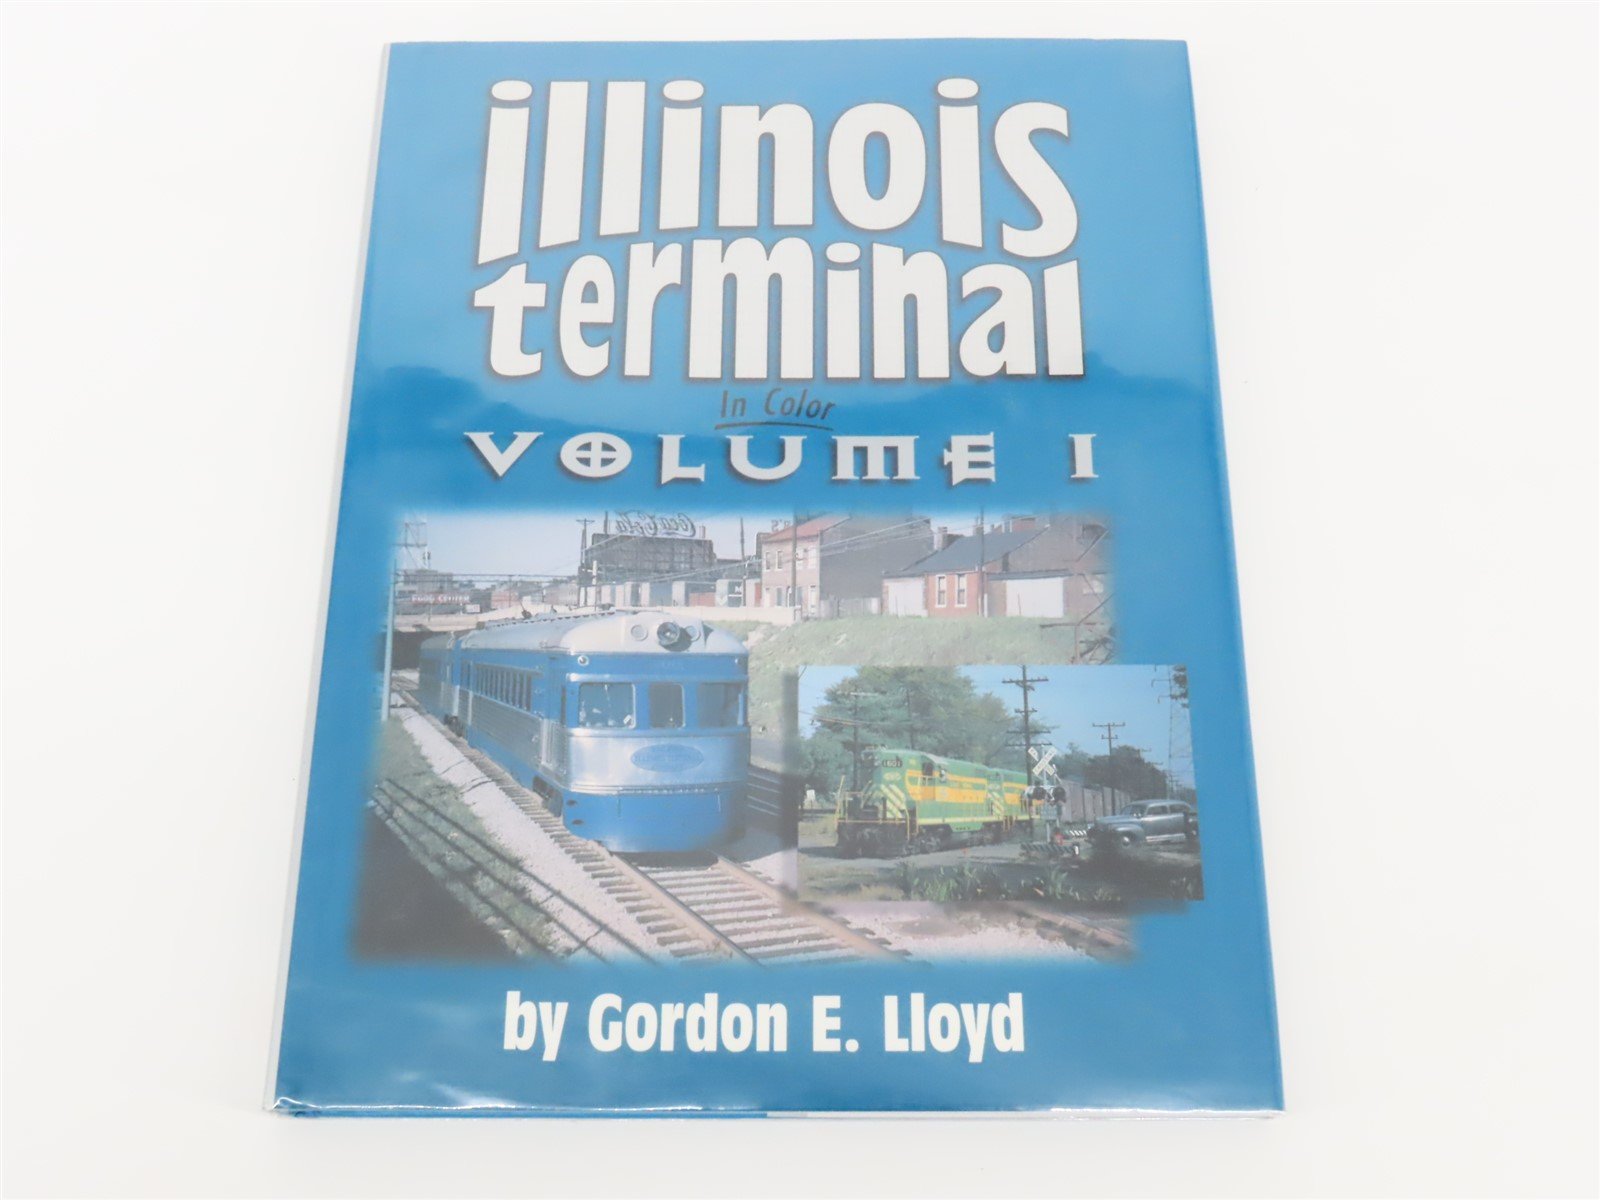 Morning Sun: Illinois Terminal Volume I by Gordon E. Lloyd ©1998 HC Book